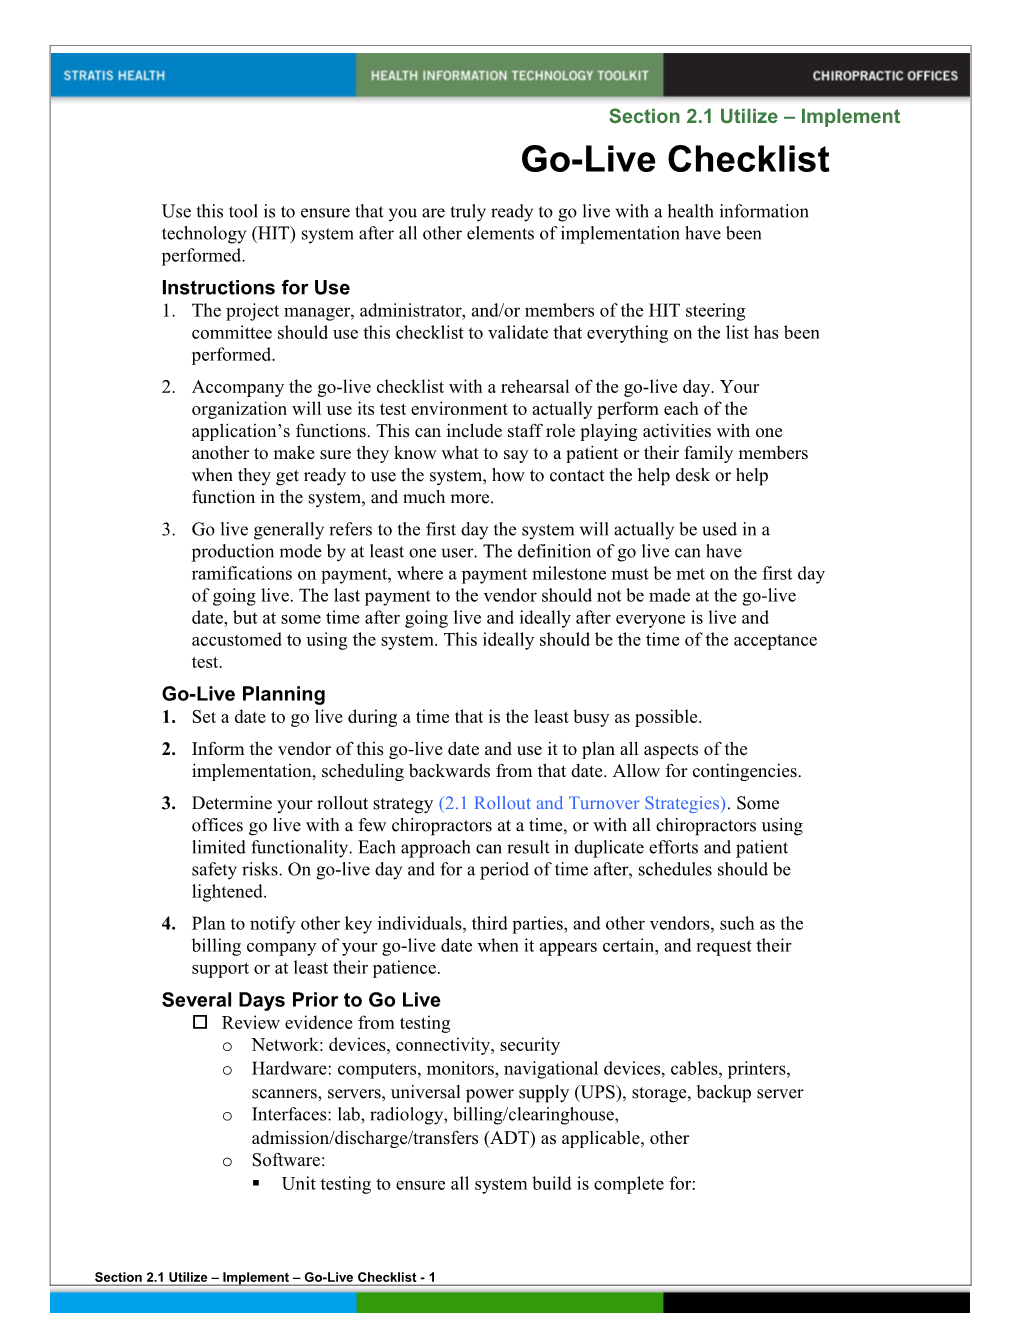 2.1 Go-Live Checklist